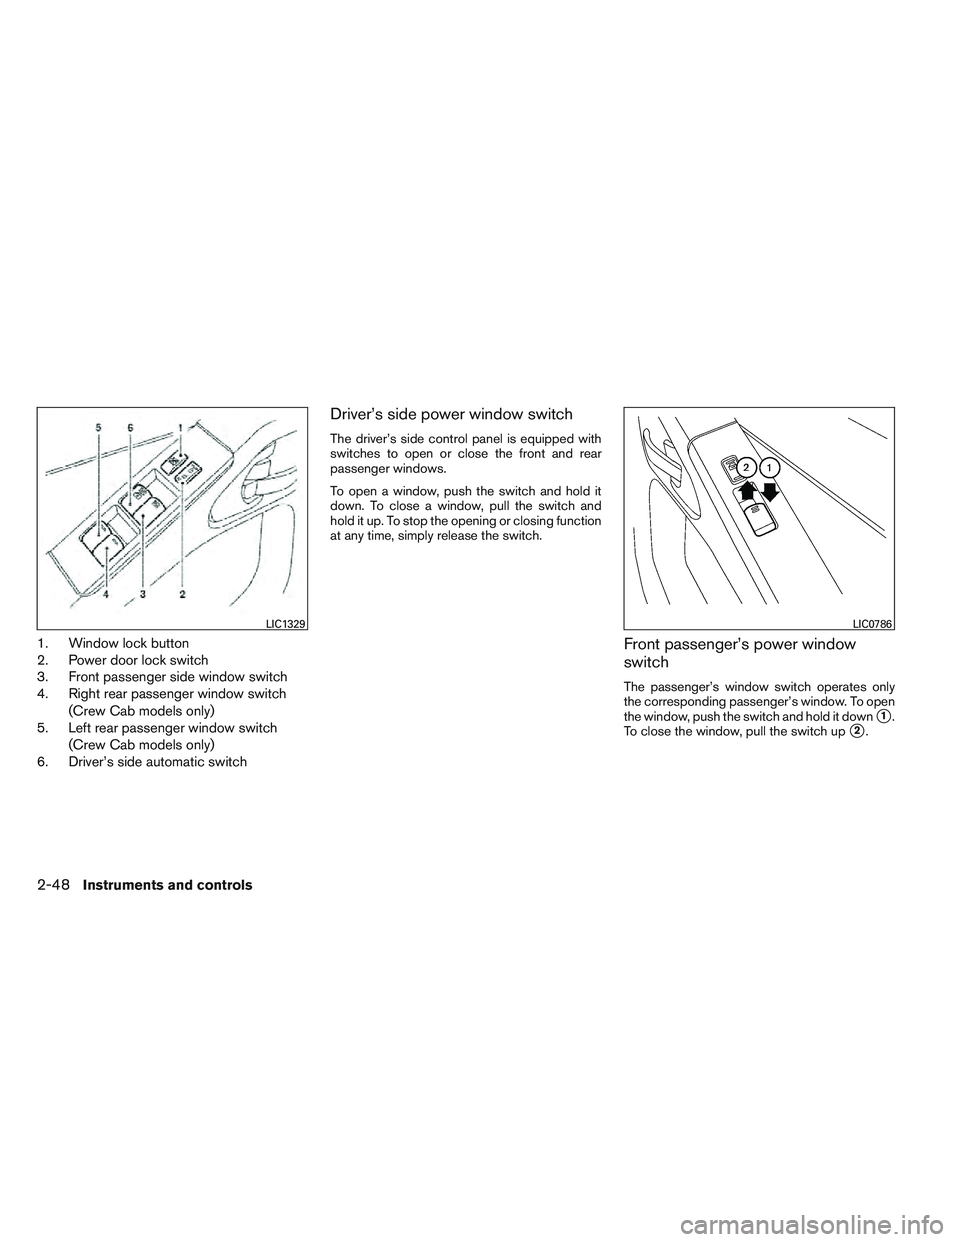 NISSAN FRONTIER 2012  Owner´s Manual 1. Window lock button
2. Power door lock switch
3. Front passenger side window switch
4. Right rear passenger window switch(Crew Cab models only)
5. Left rear passenger window switch
(Crew Cab models 